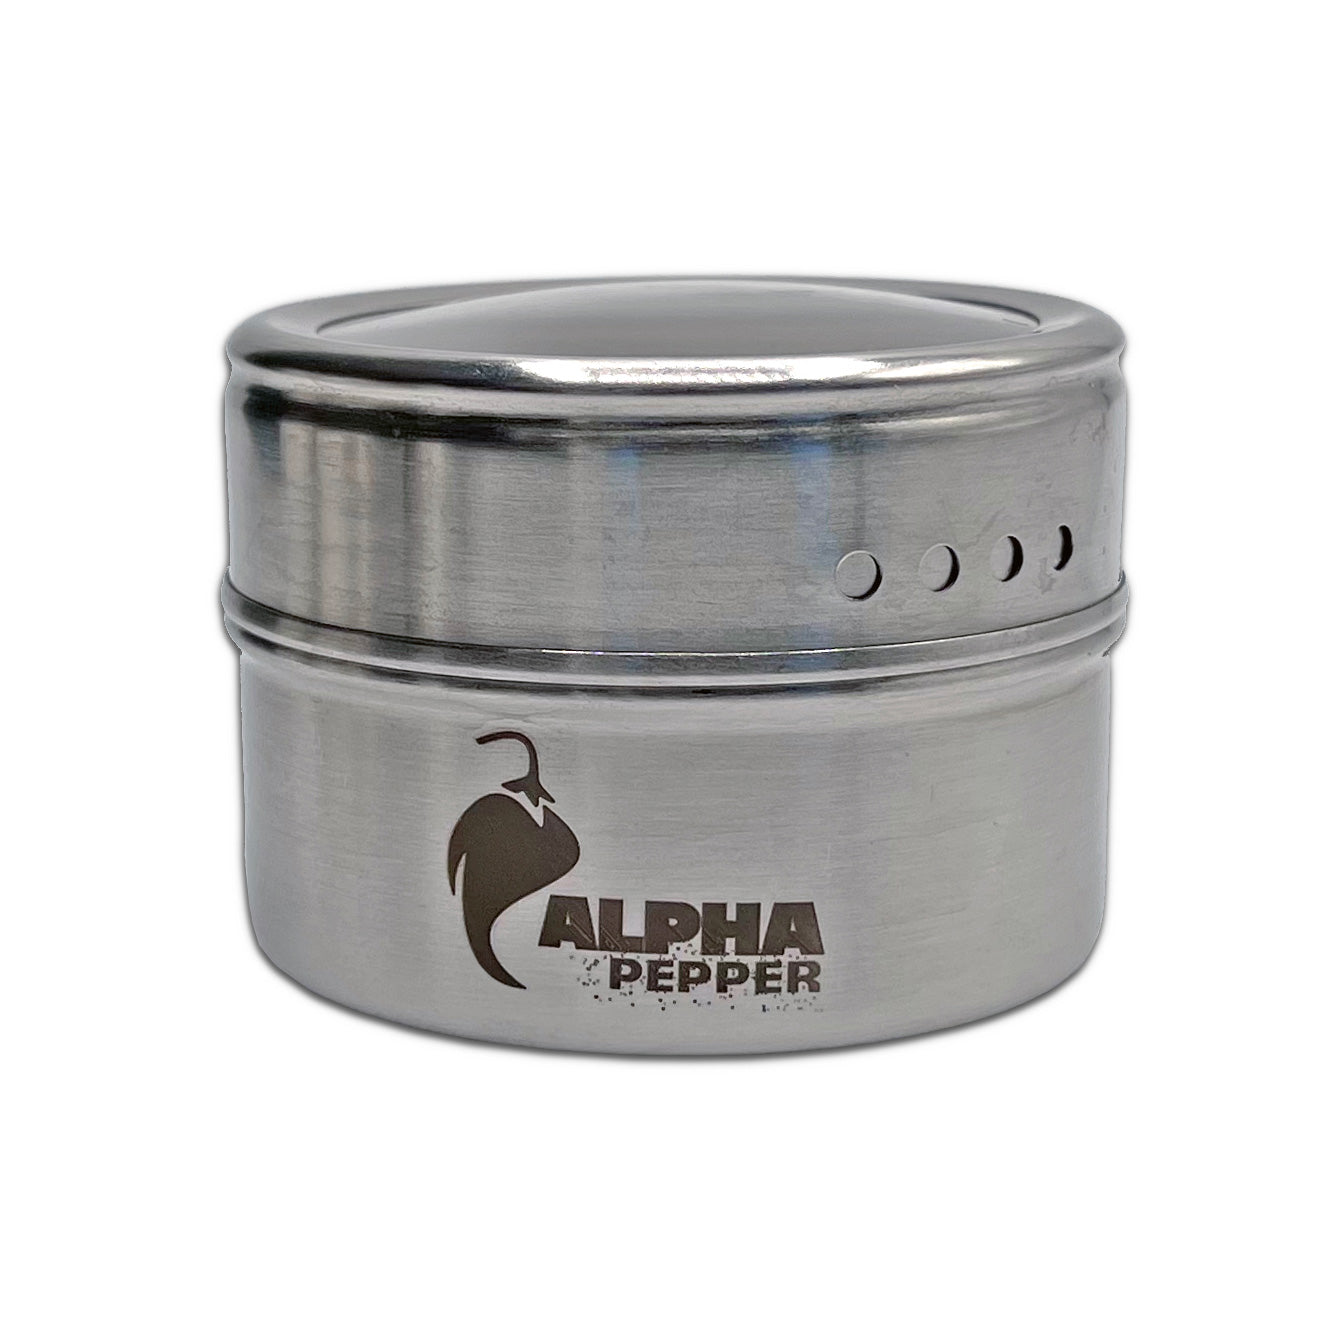 Habanero Pepper Powder - 1 oz.